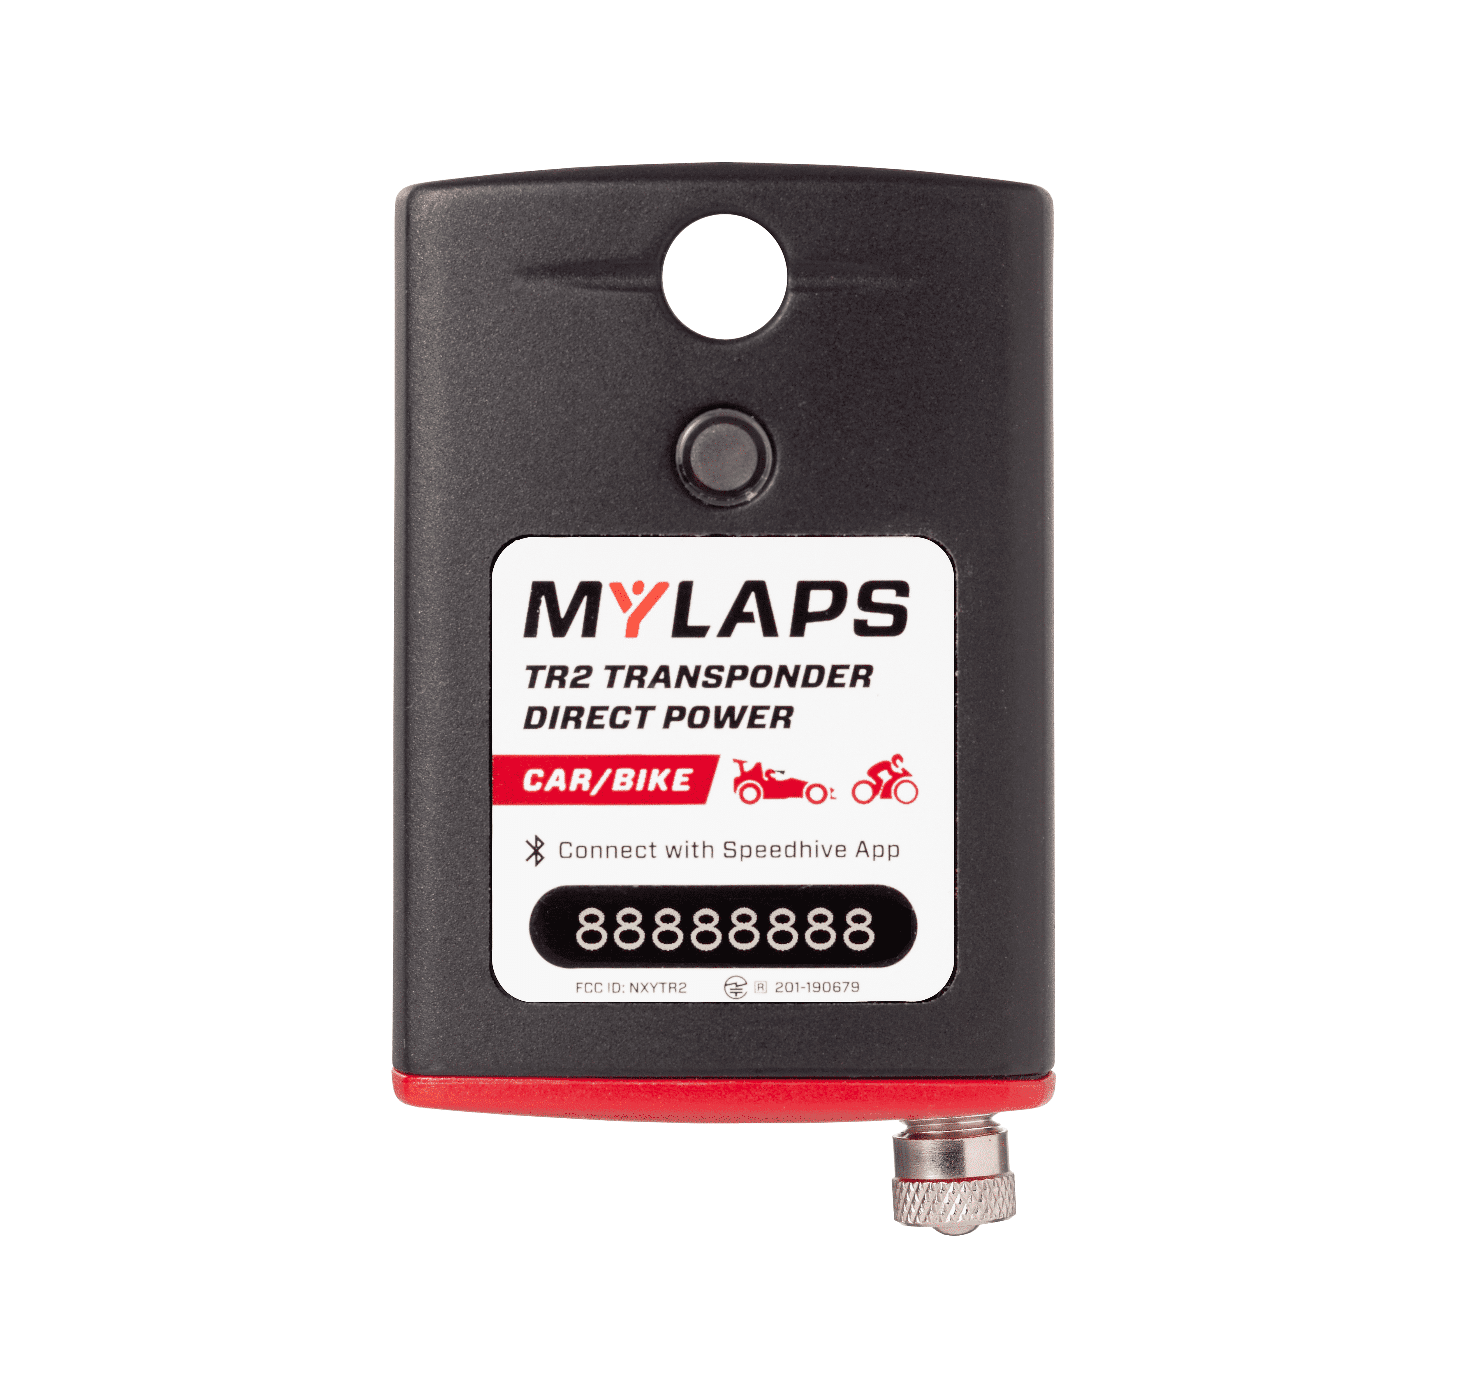 Mylaps transponder direct power TR2